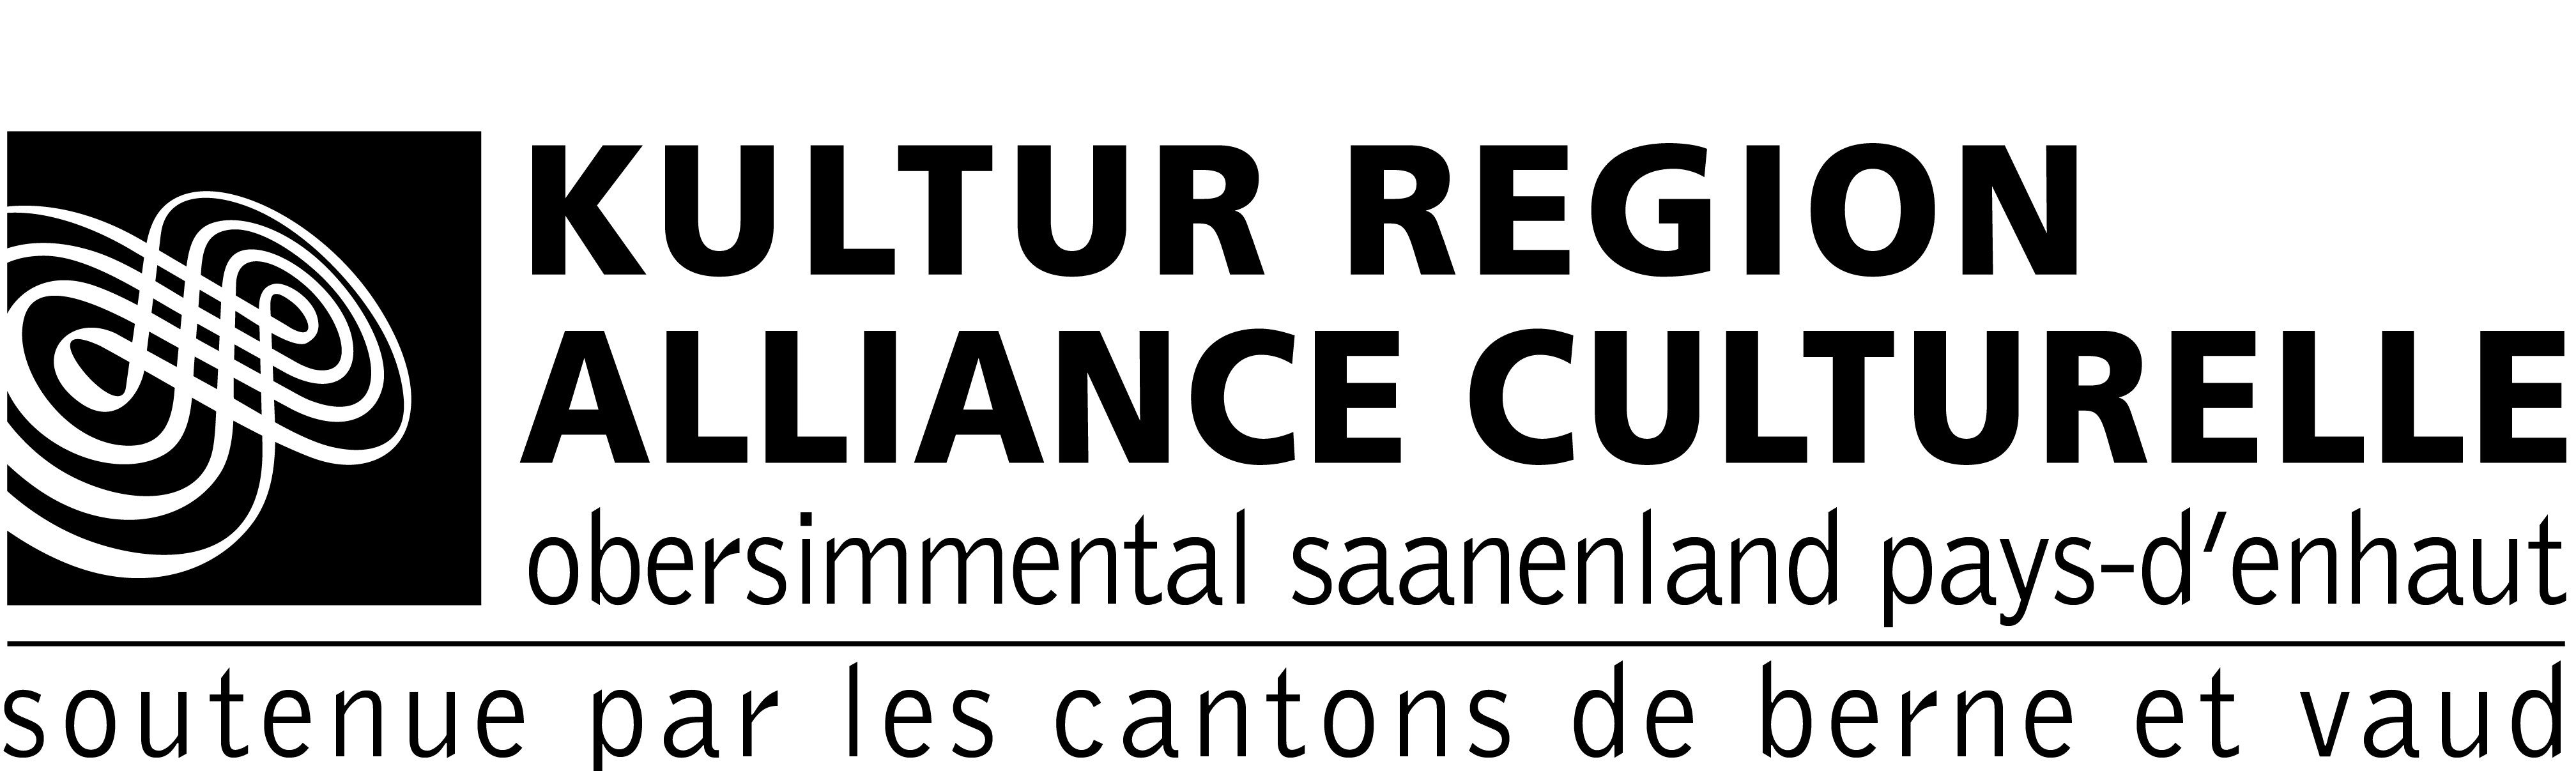 Alliance culturelle - Logo